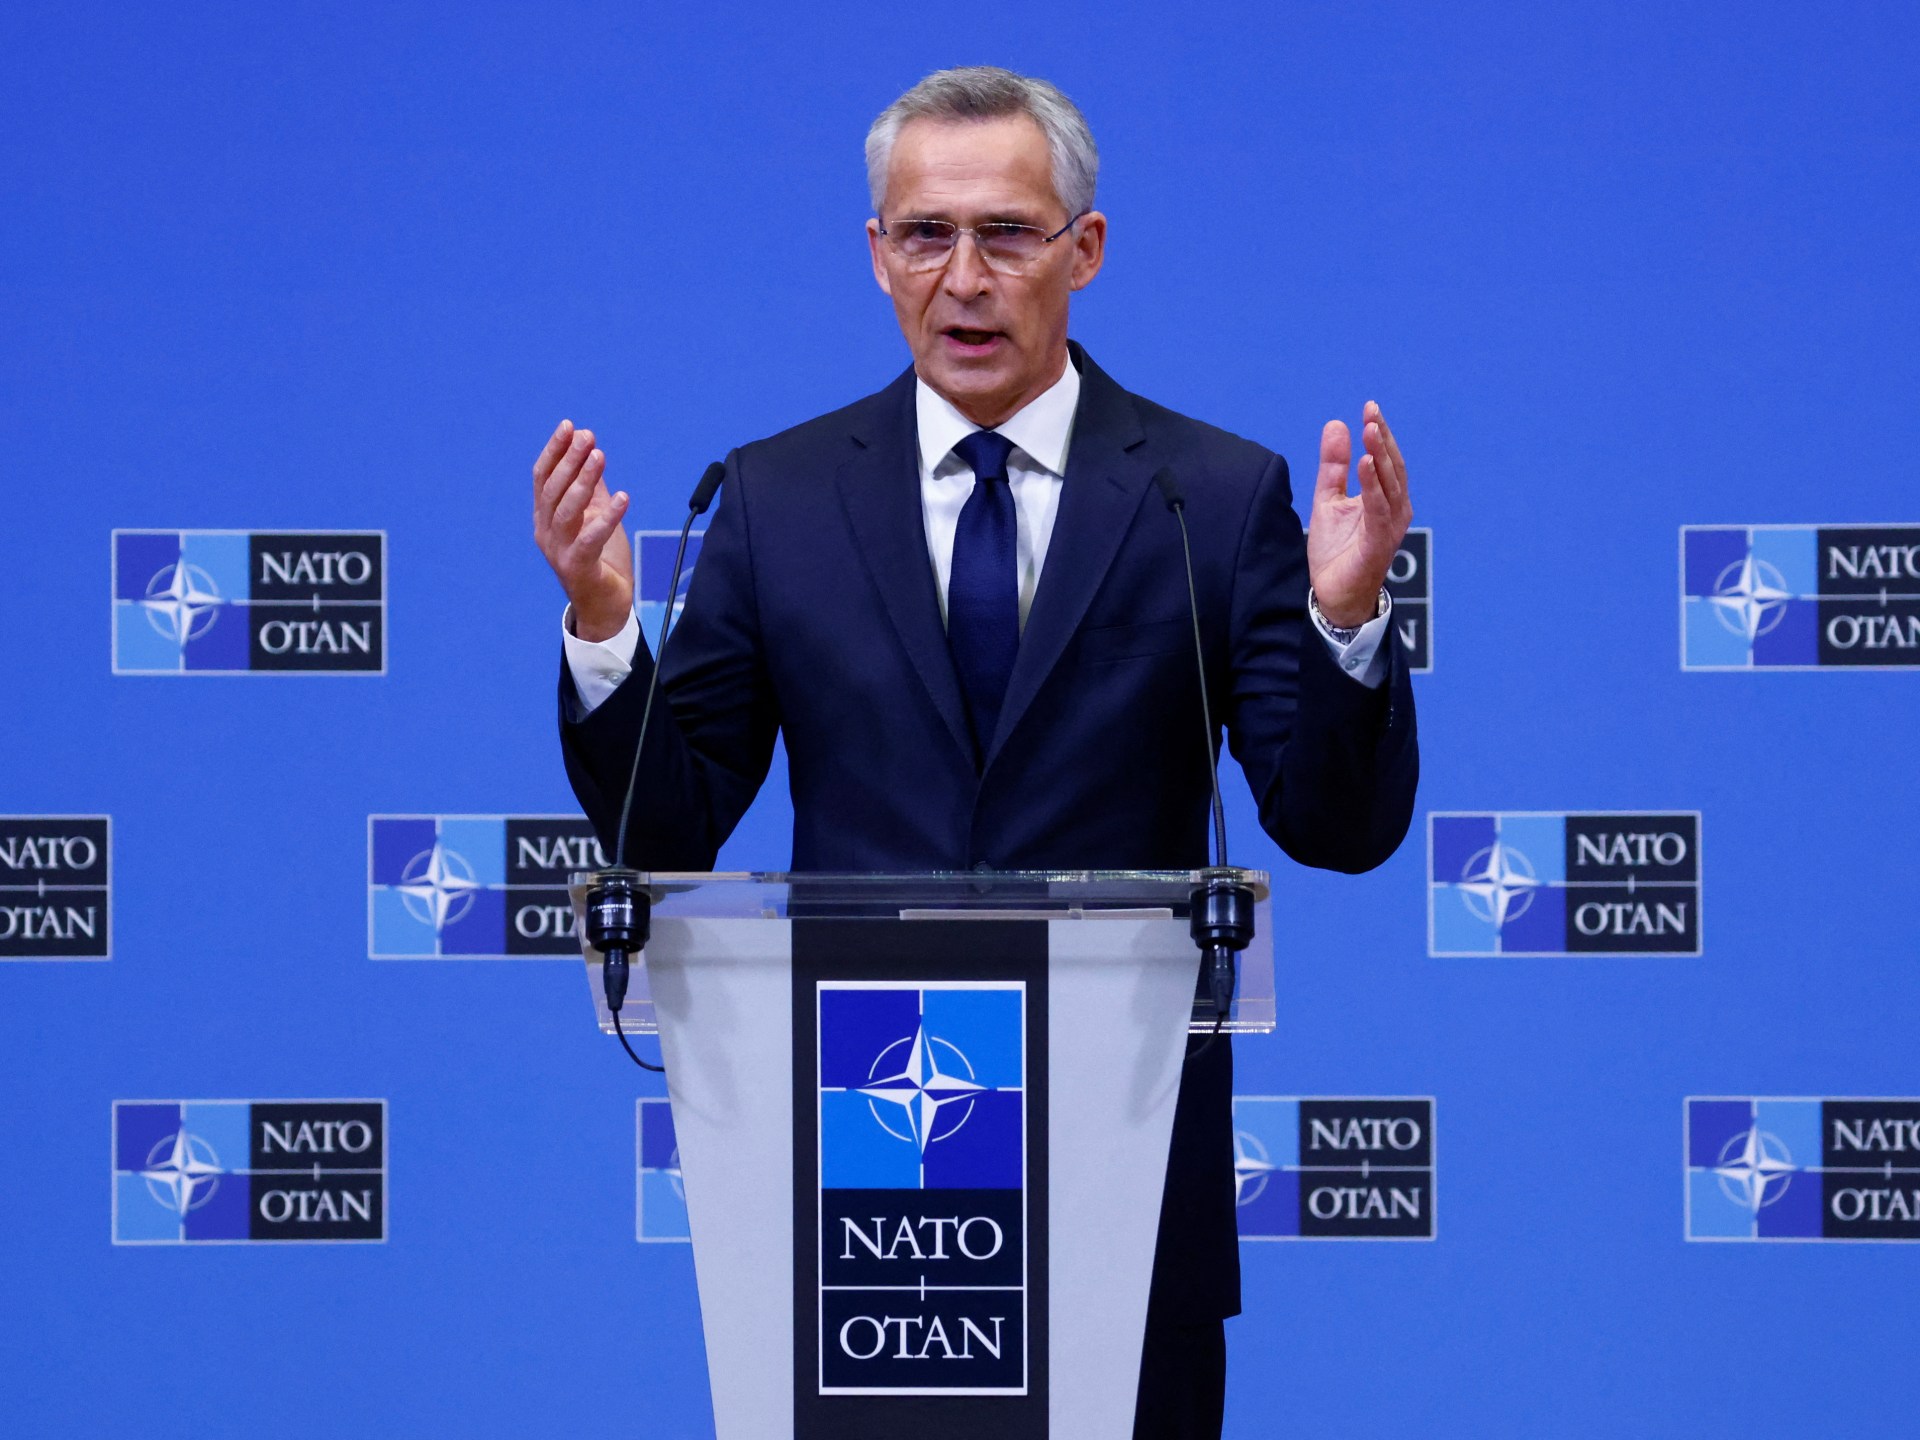 NATO faces new problem as conflict spills into Poland